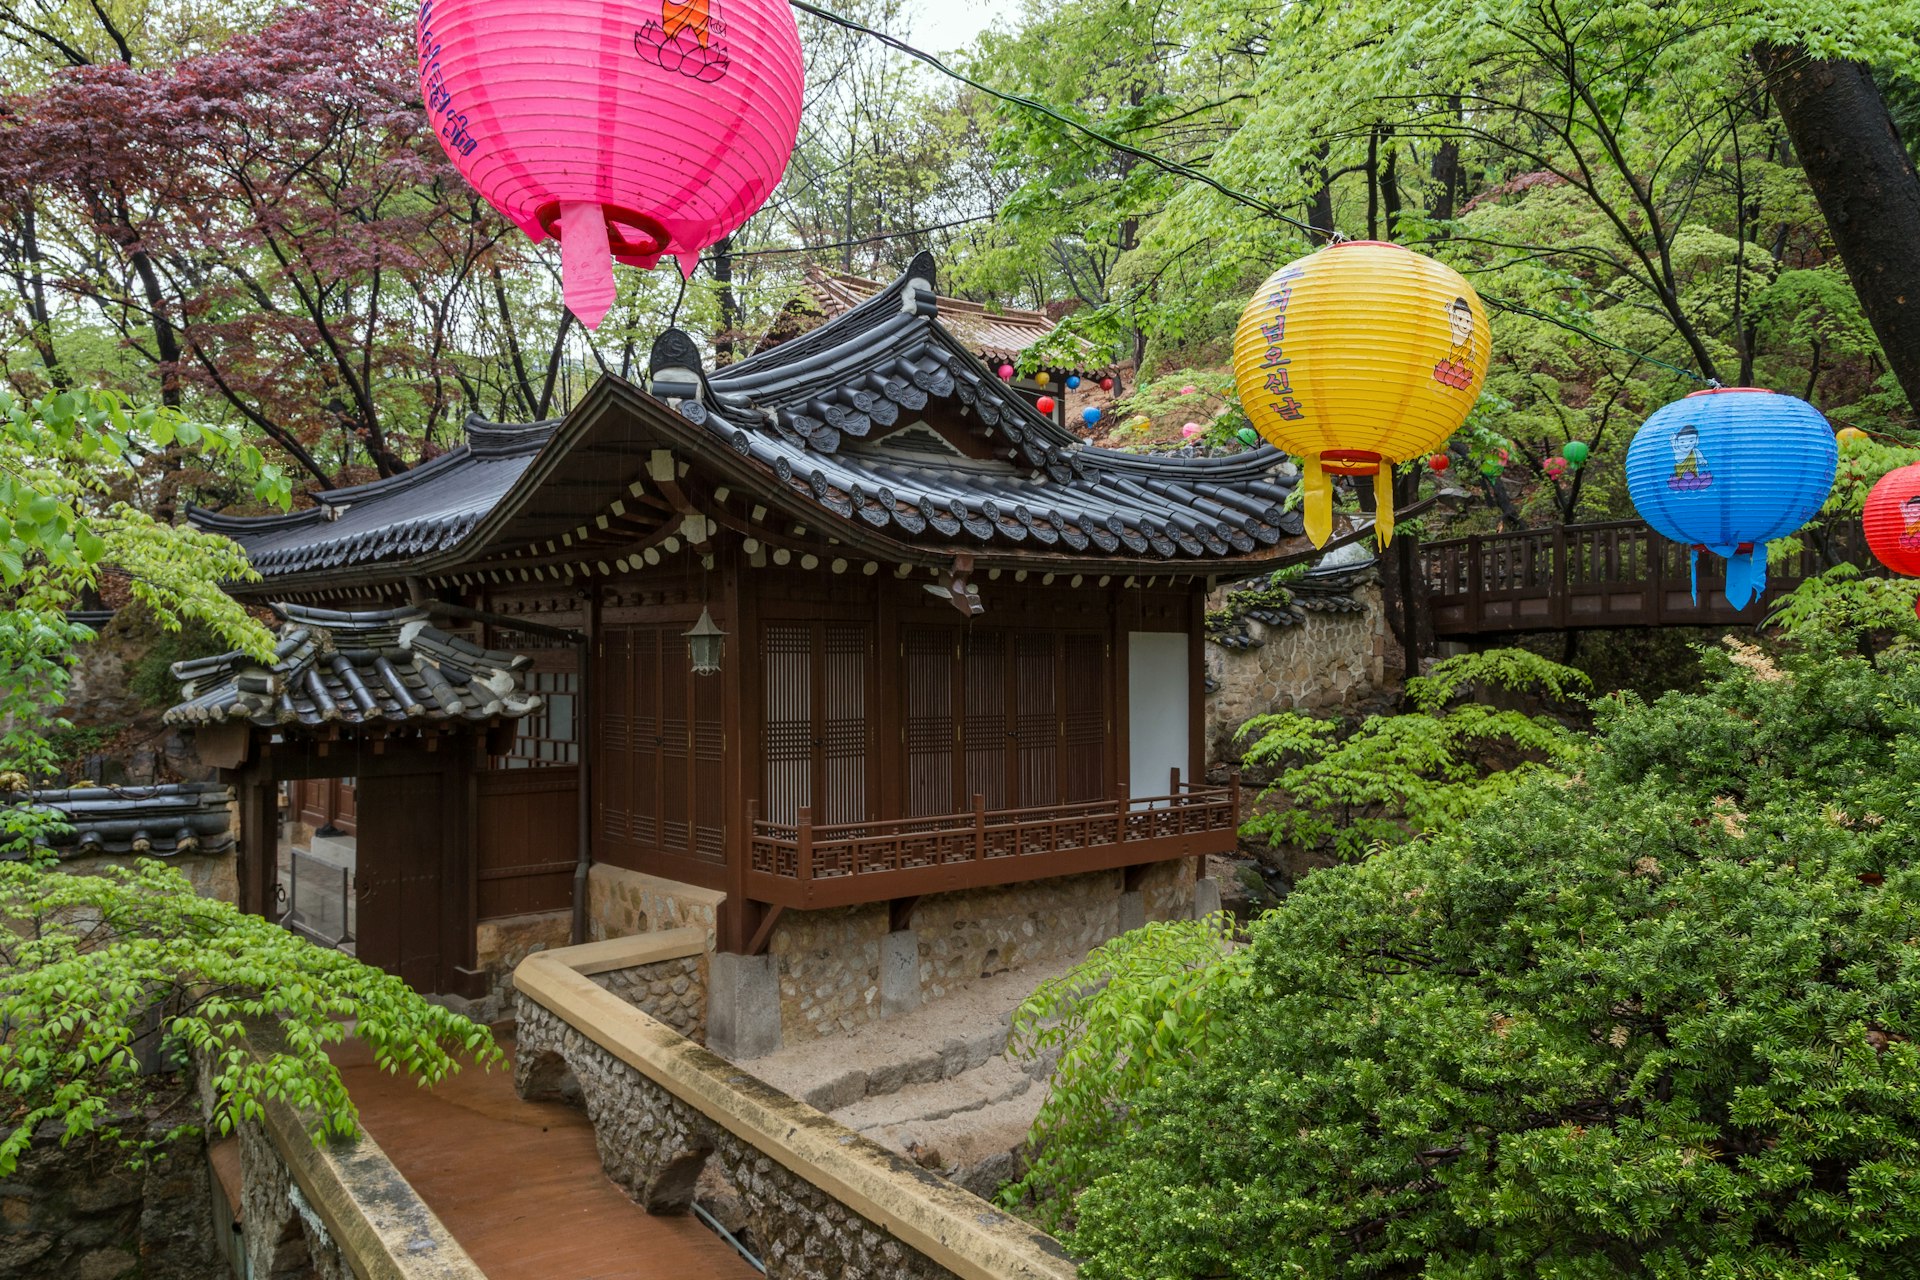 Colorful lanterns and Gilsangheon at Gilsangsa Temple, Seoul, South Korea